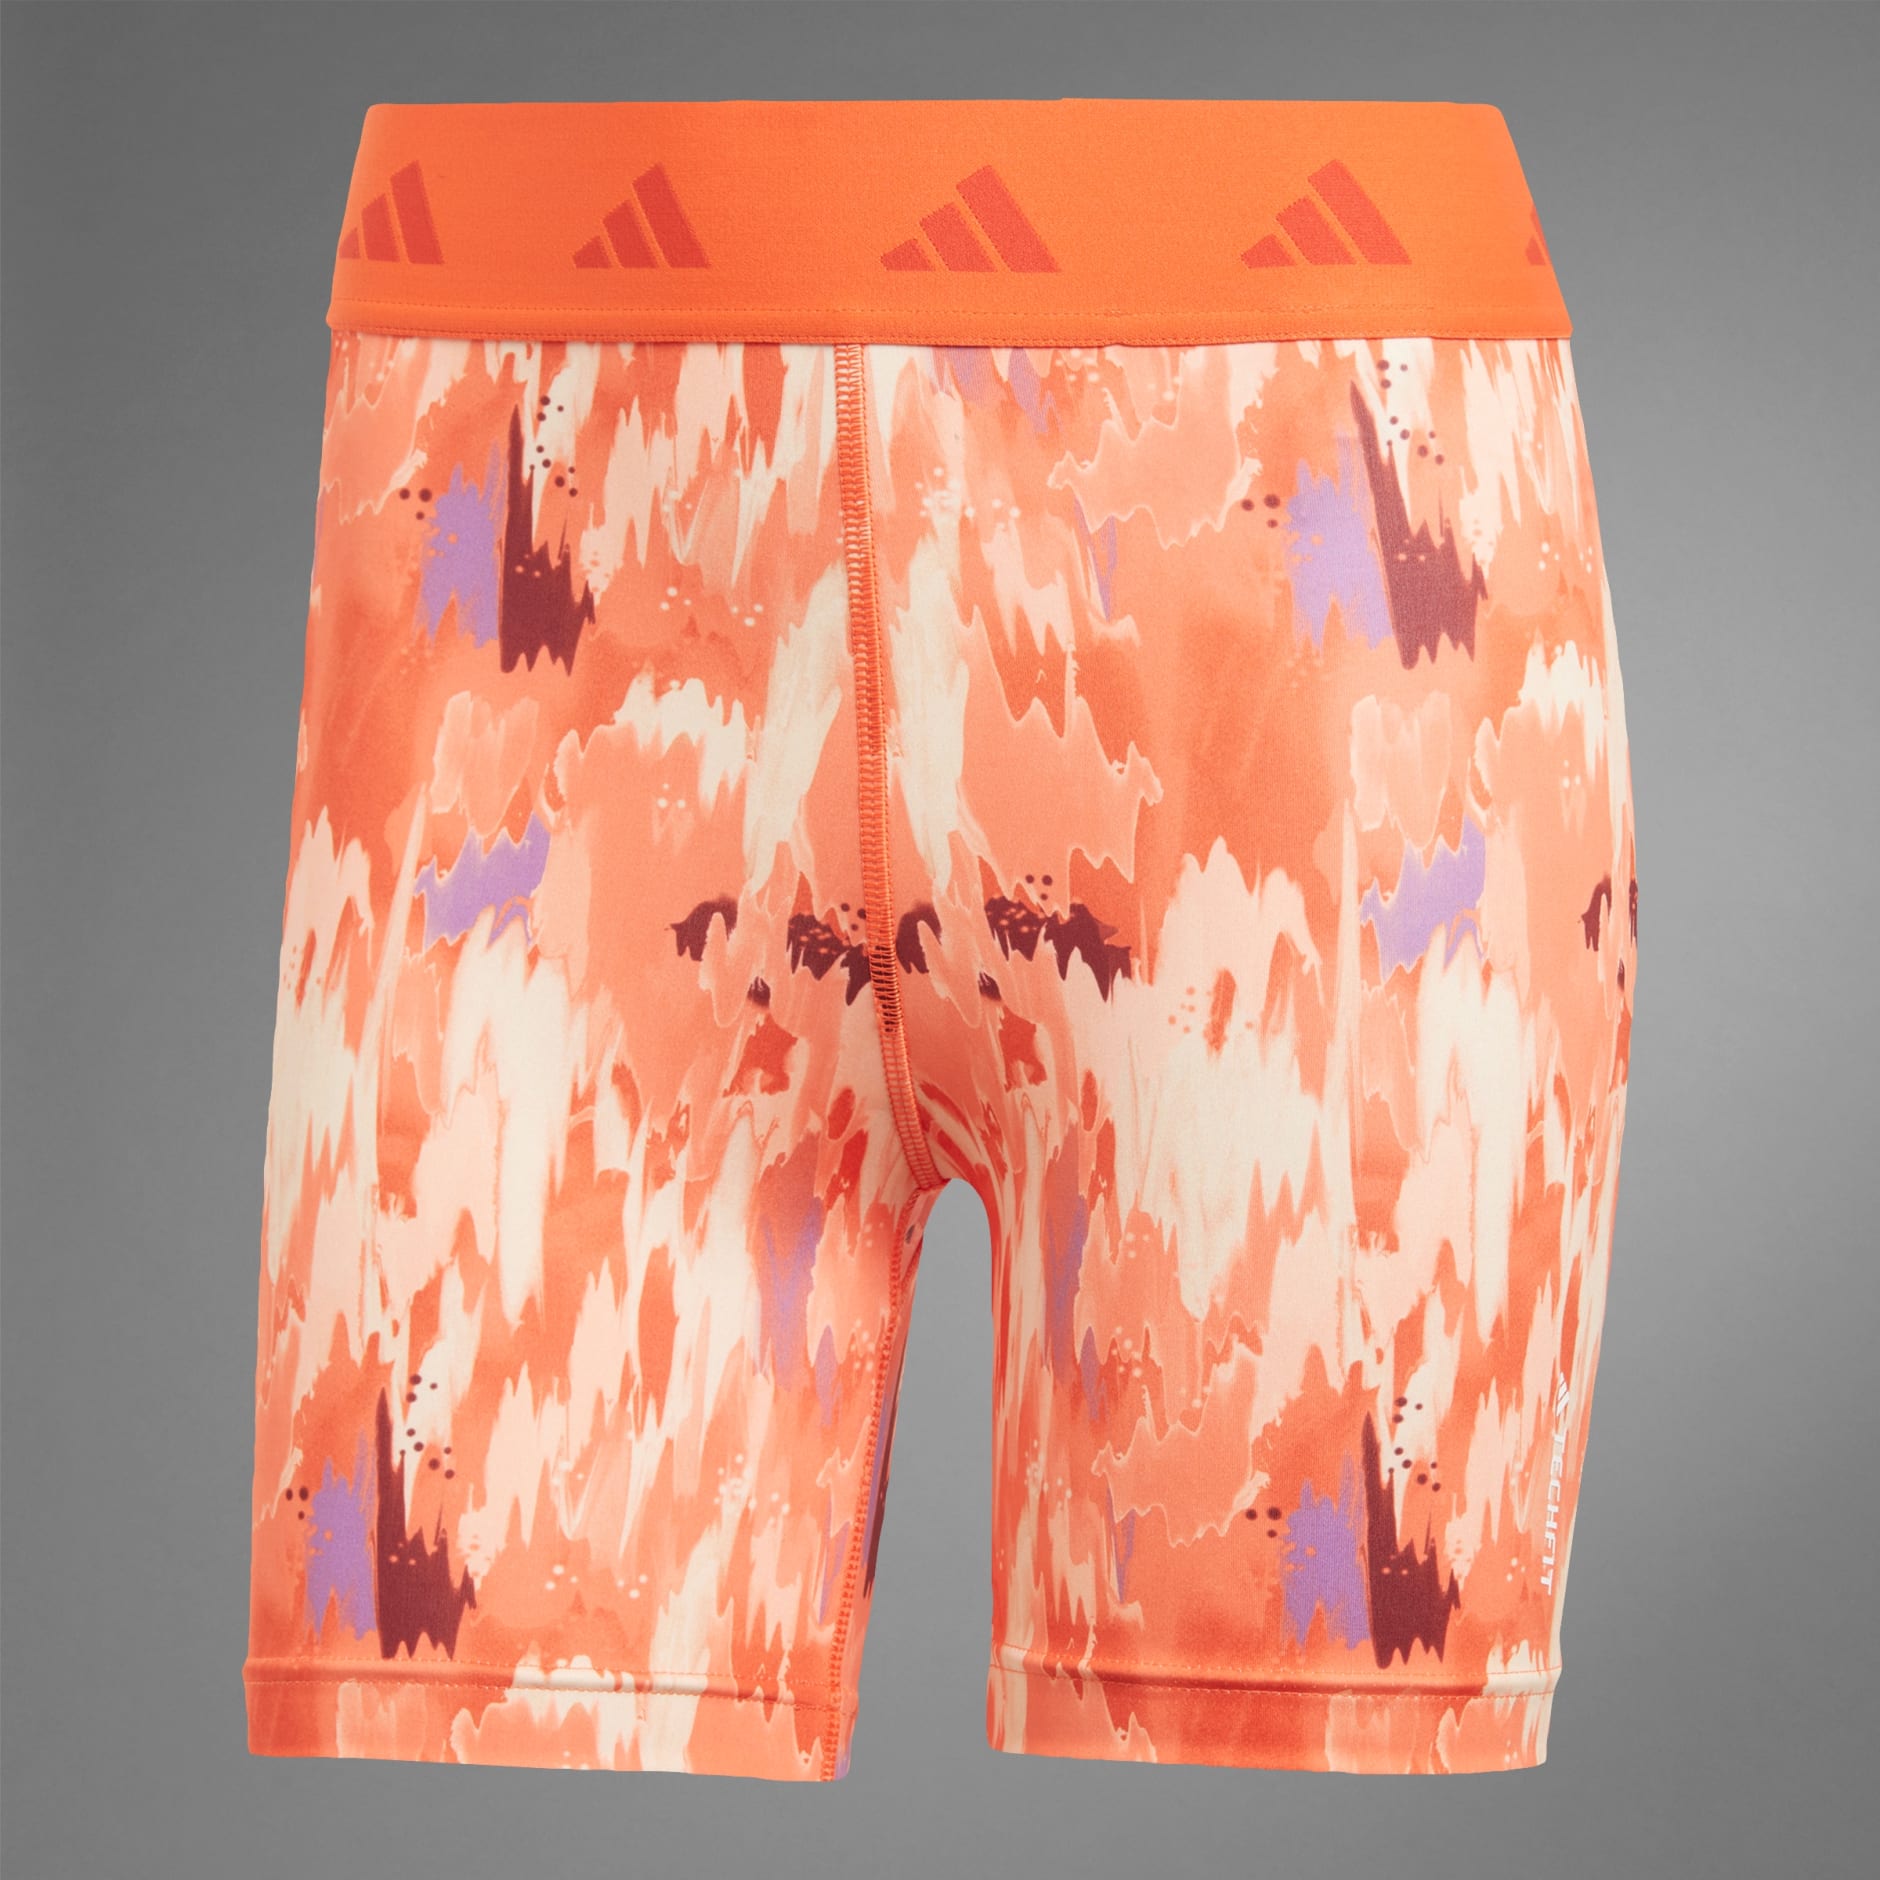 Adidas - Adidas Techfit Climalite Shorts on Designer Wardrobe